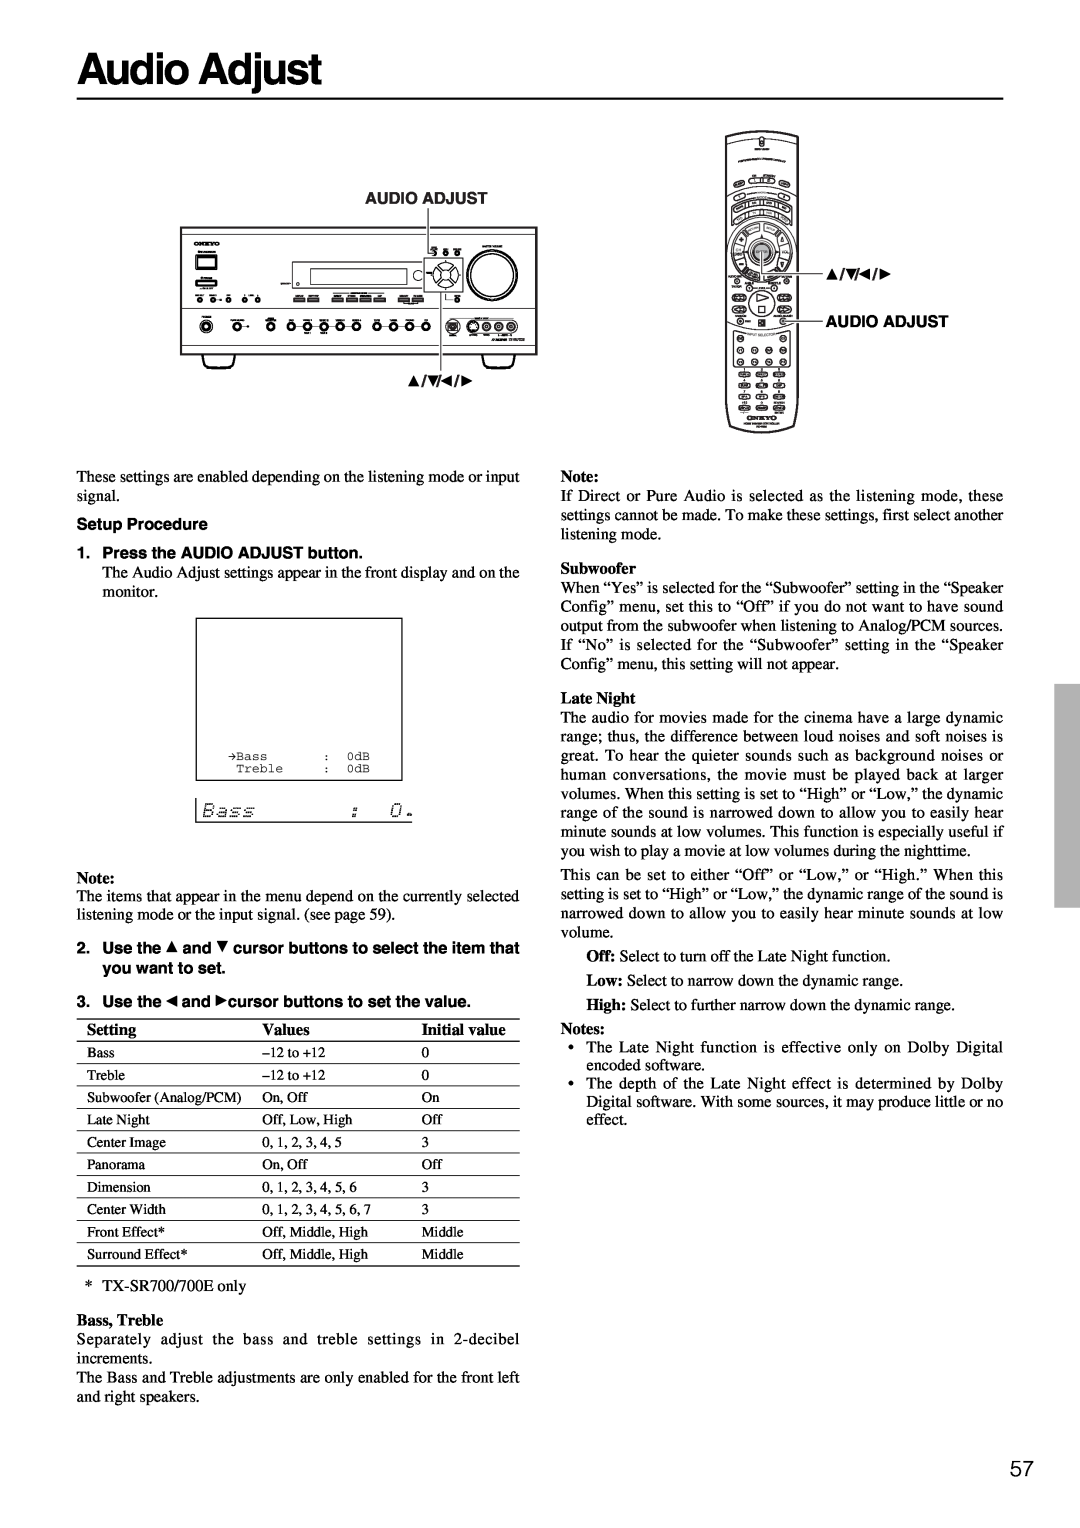 Onkyo TX-SR600/600E Audio Adjust, Setting, Values, Initial value, Bass, Treble, Subwoofer, Late Night, Notes 